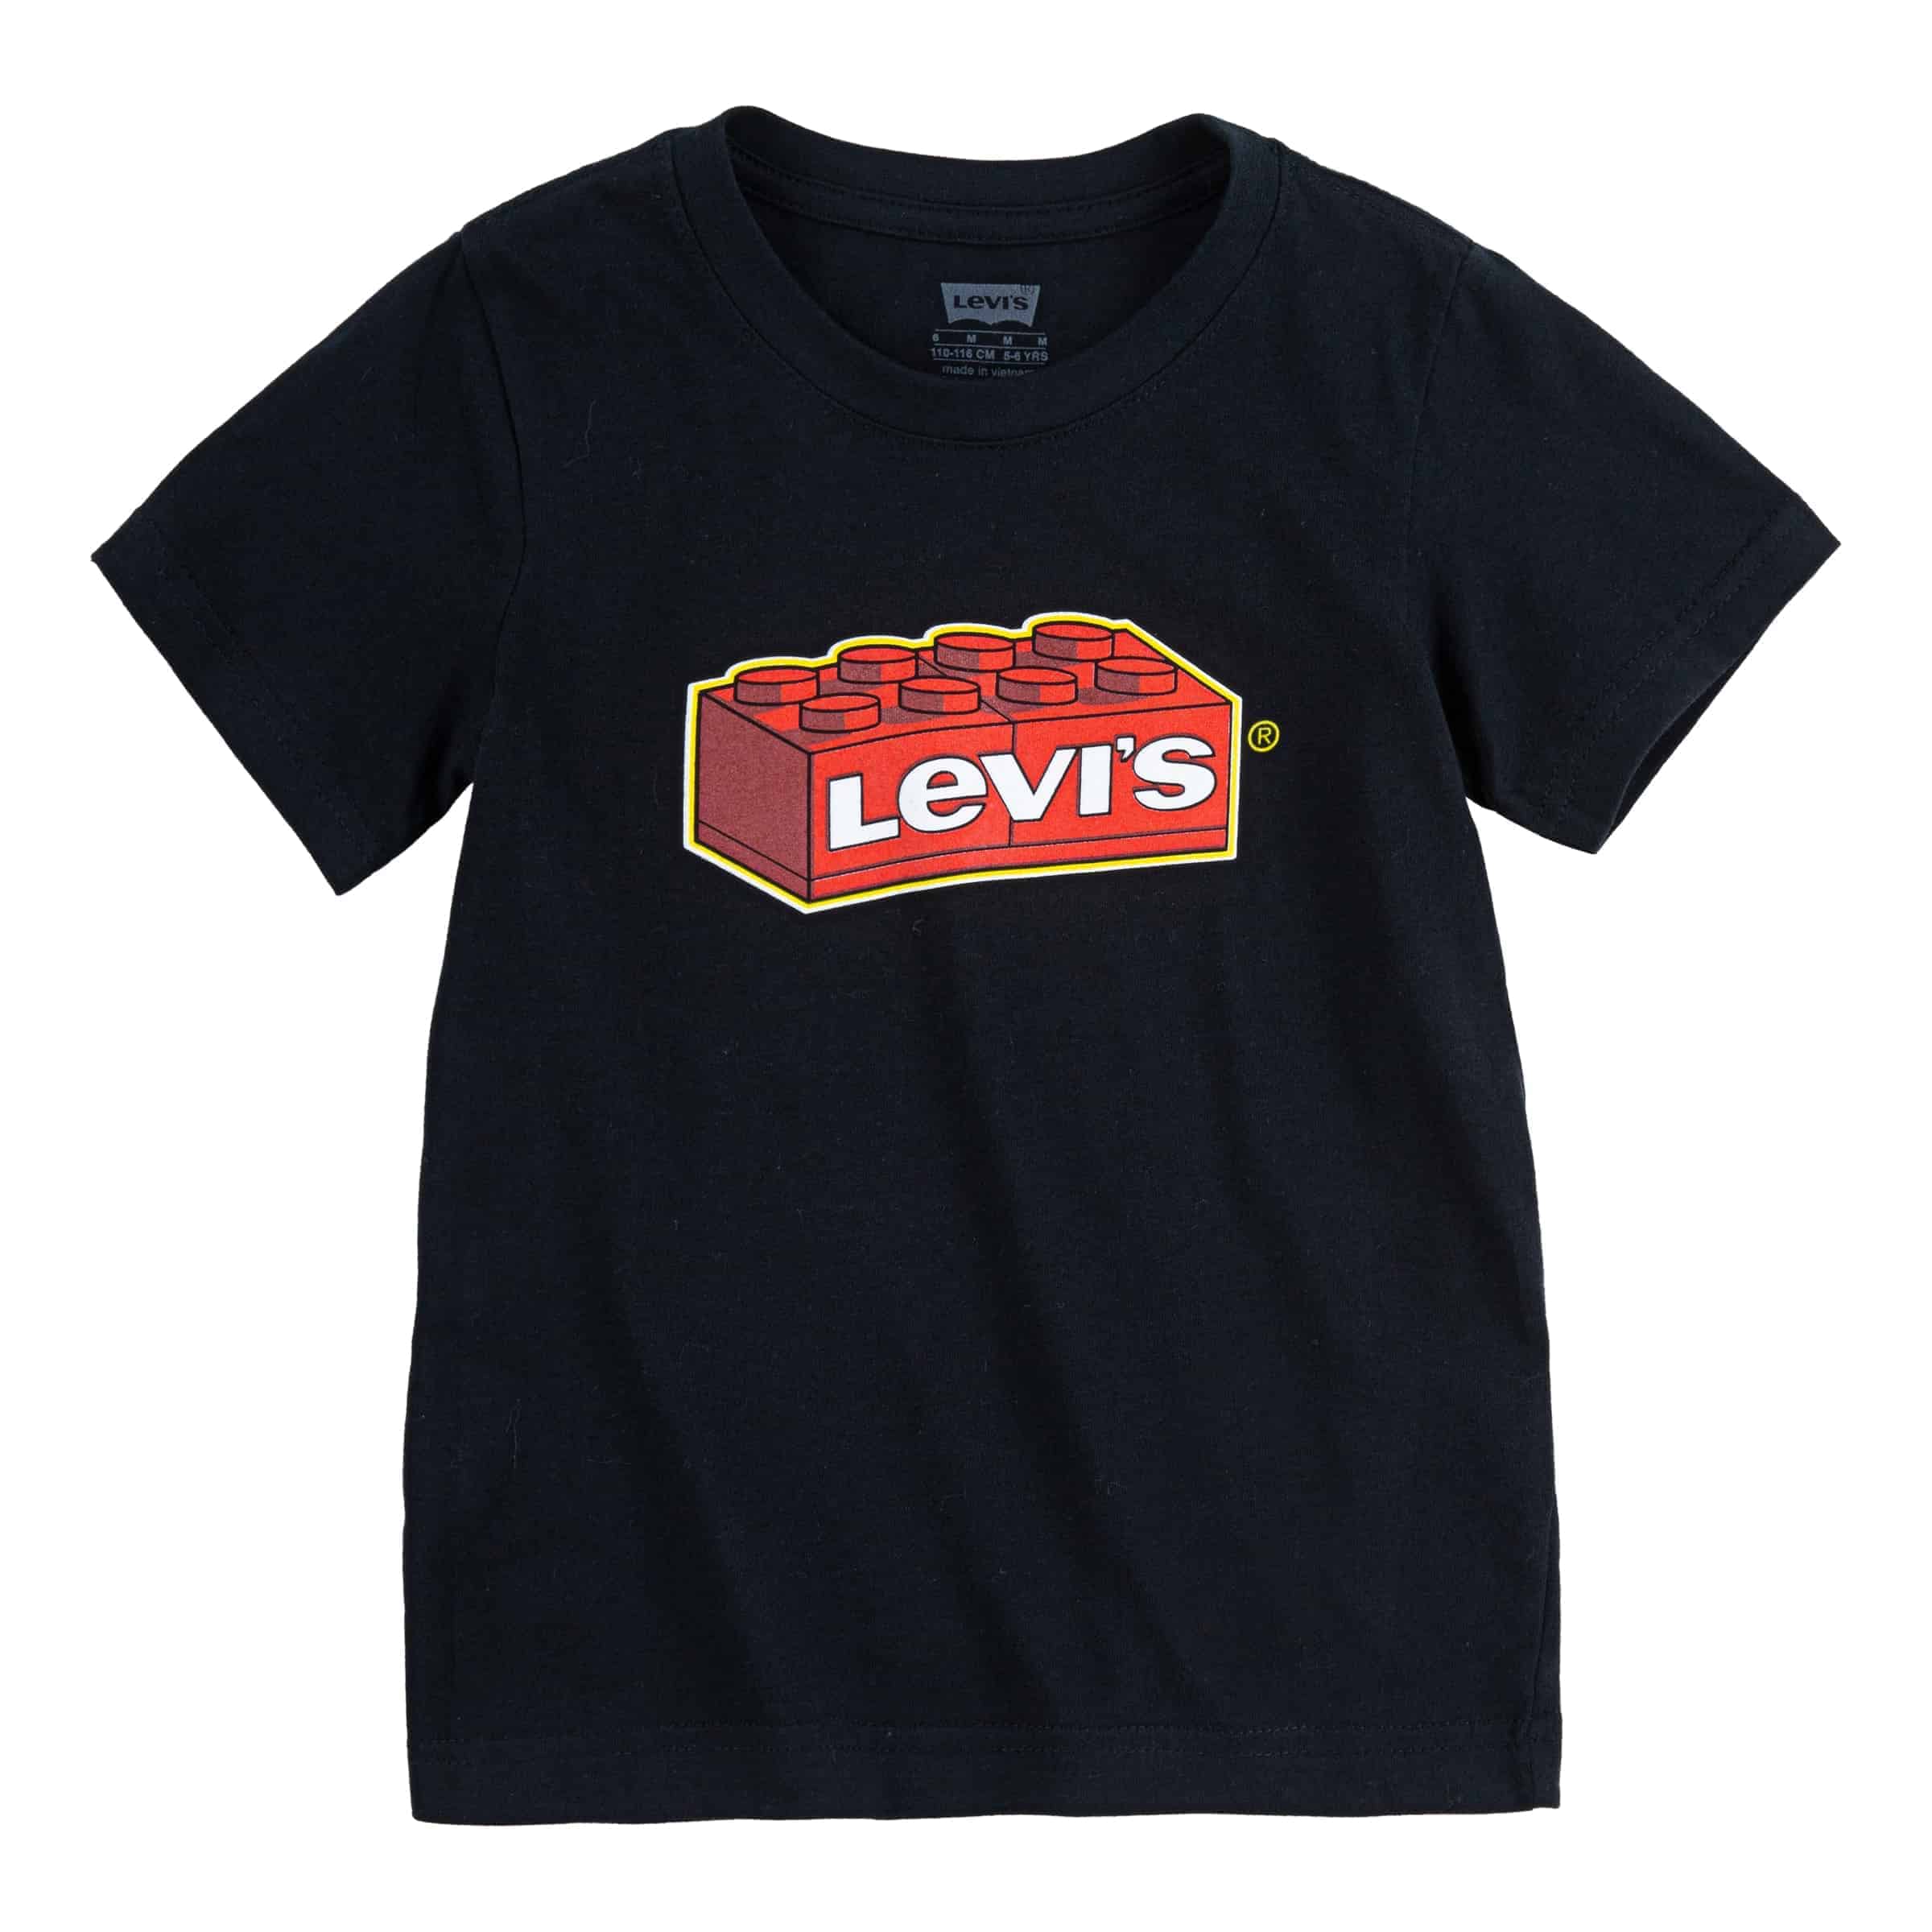 levis x lego 5006413 logo t shirt 4 7